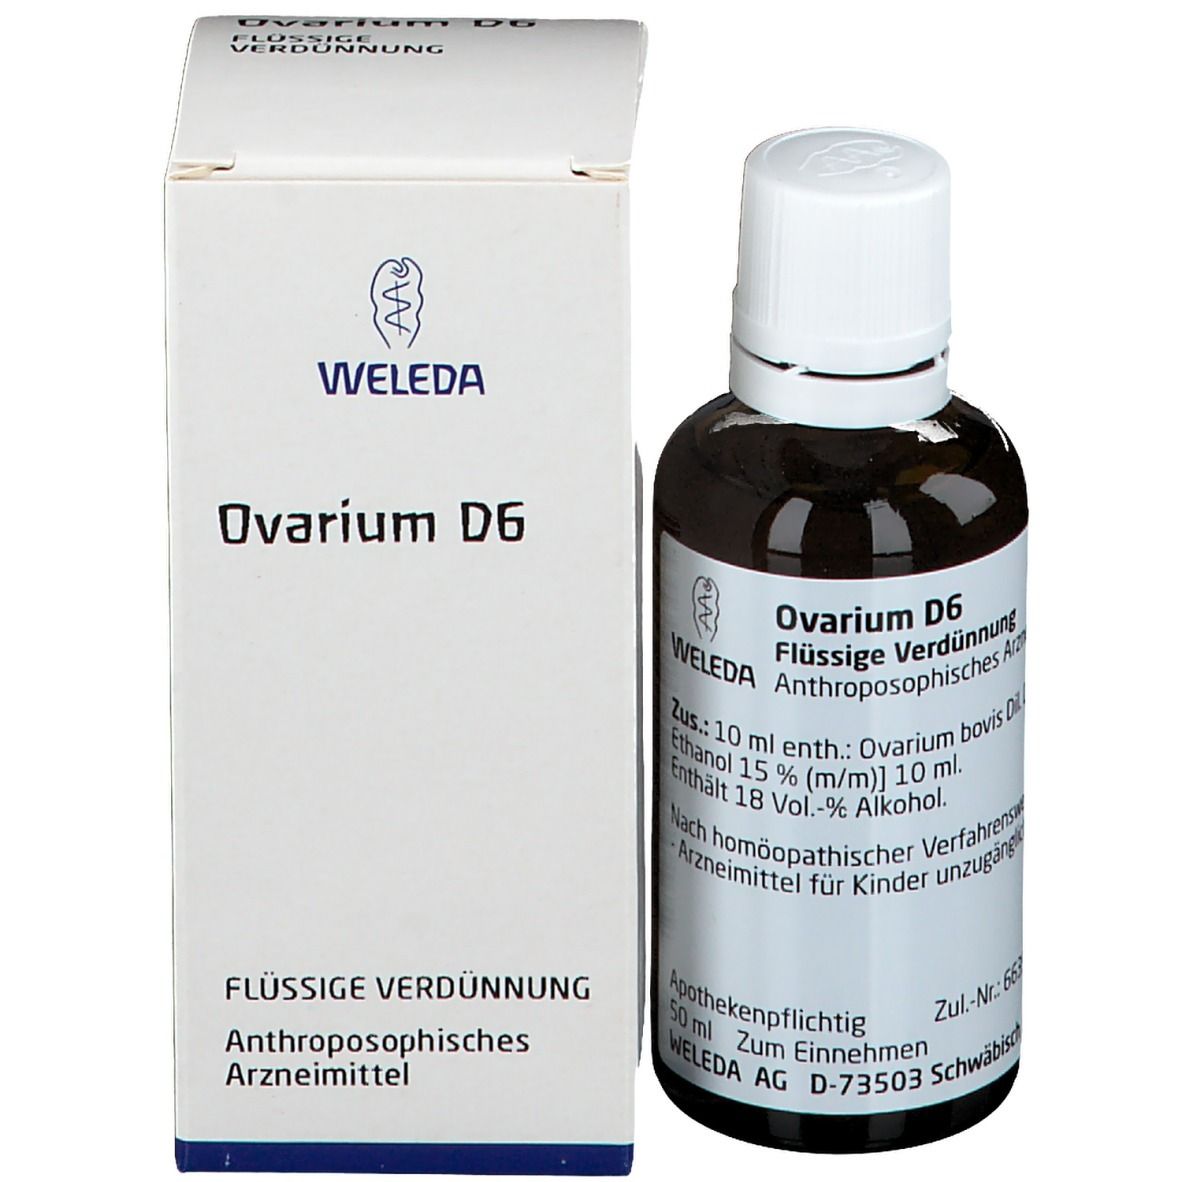 Ovarium D6